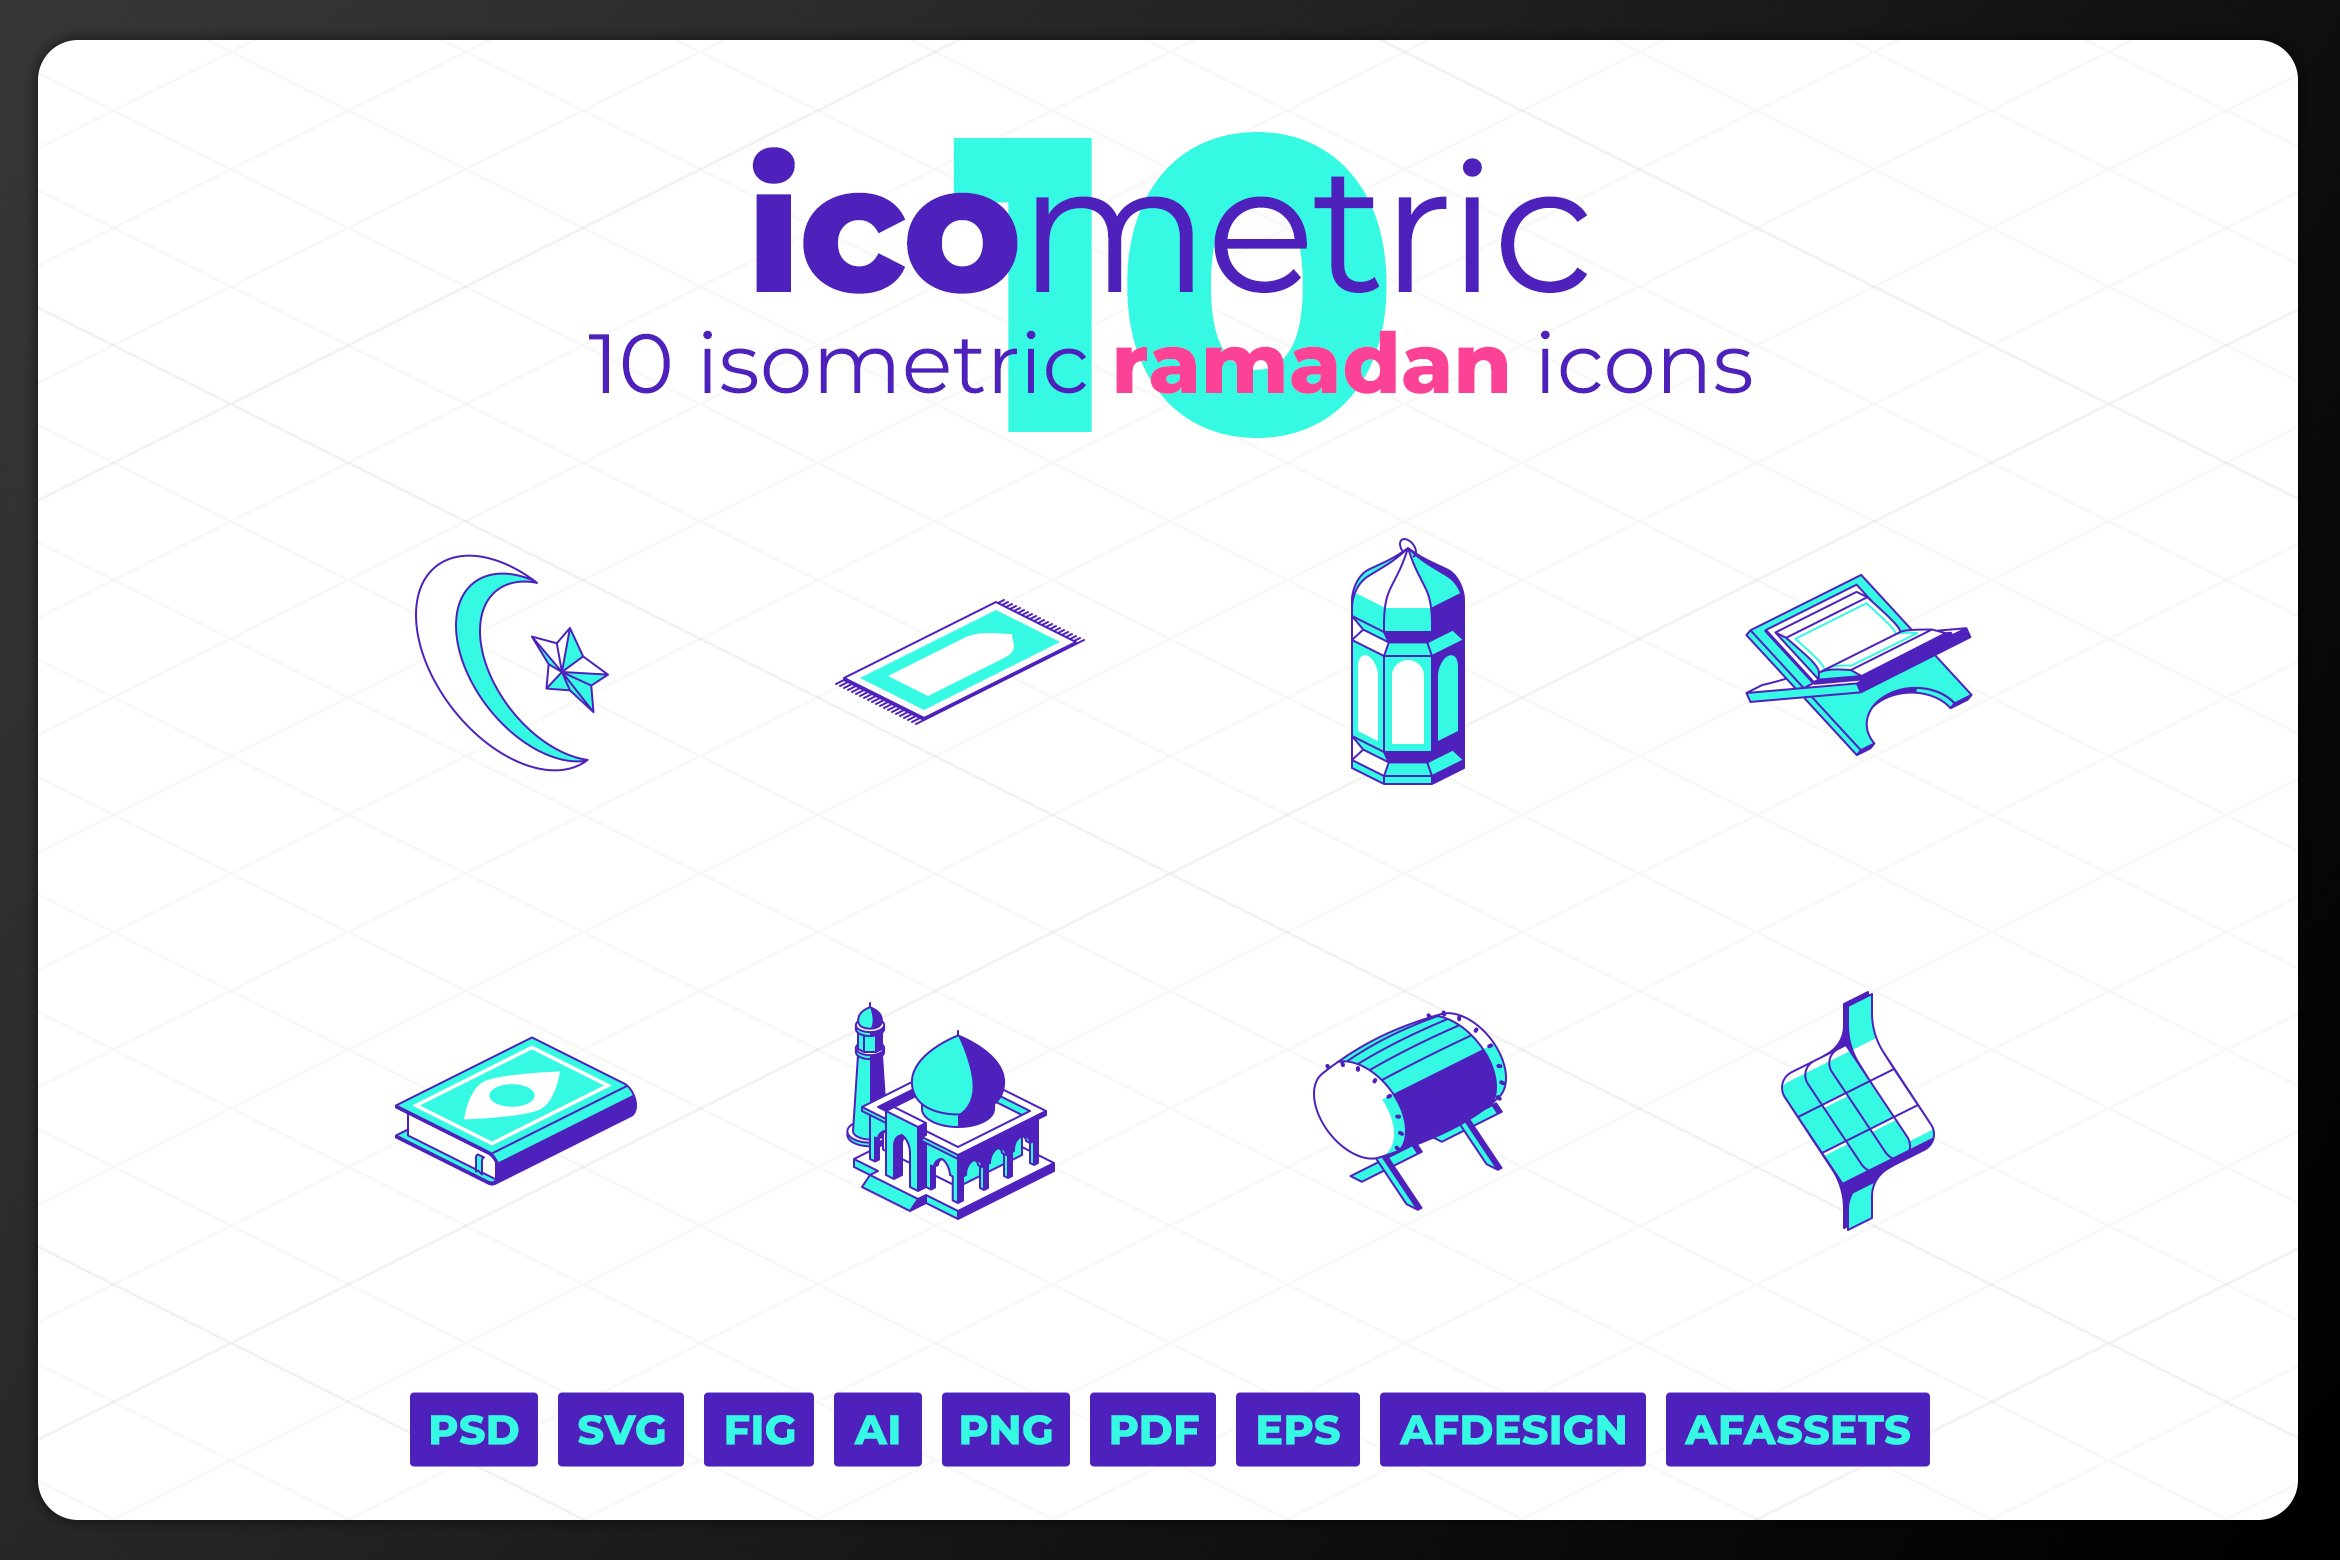 Icometric - Ramadan Icons cover image.